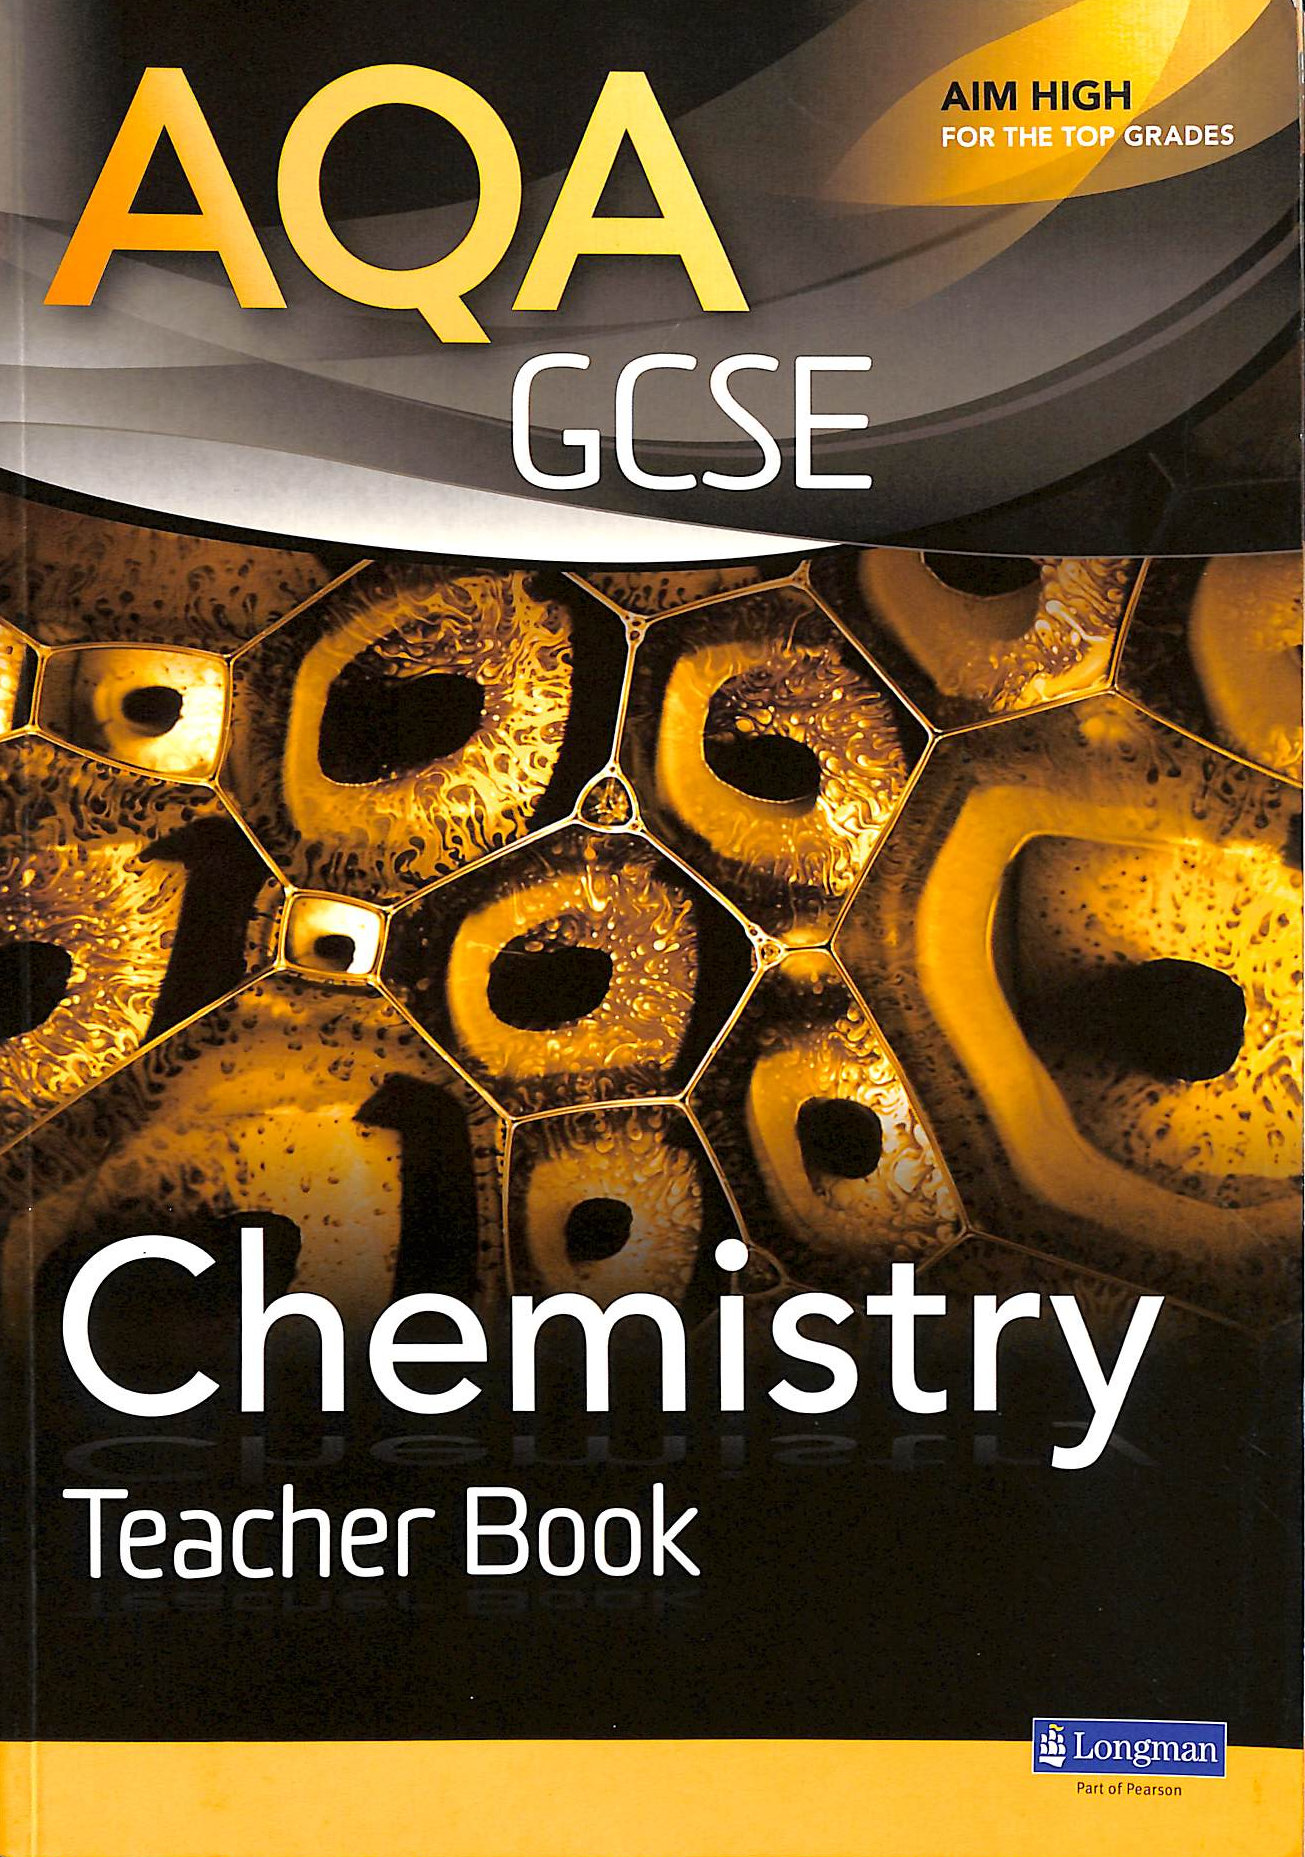 ENGLISH, NIGEL - AQA GCSE Chemistry Teacher Book (AQA GCSE Science 2011)